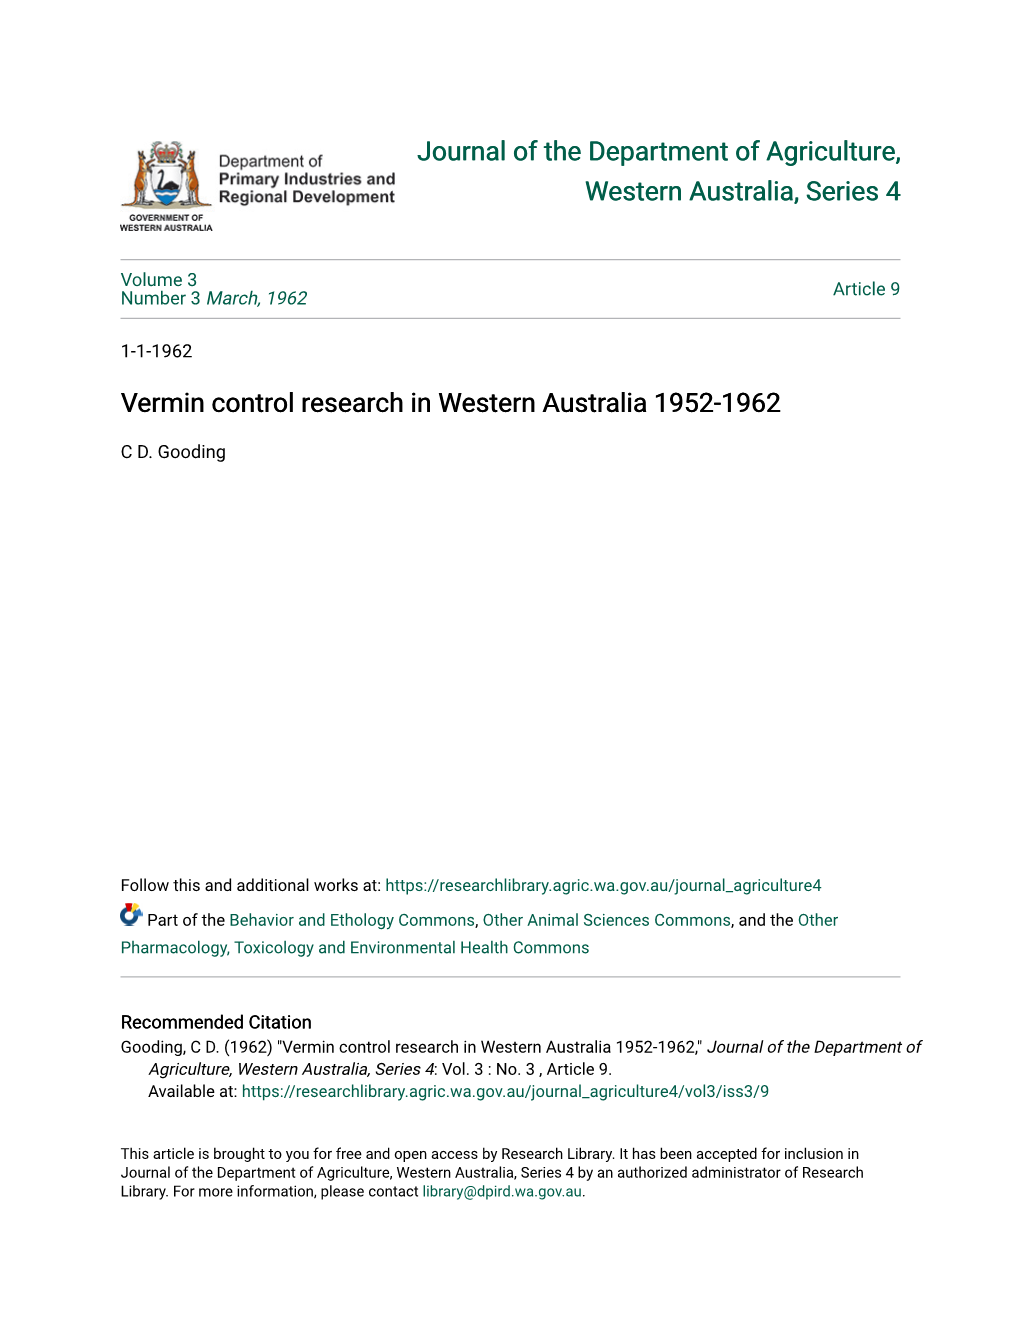 Vermin Control Research in Western Australia 1952-1962